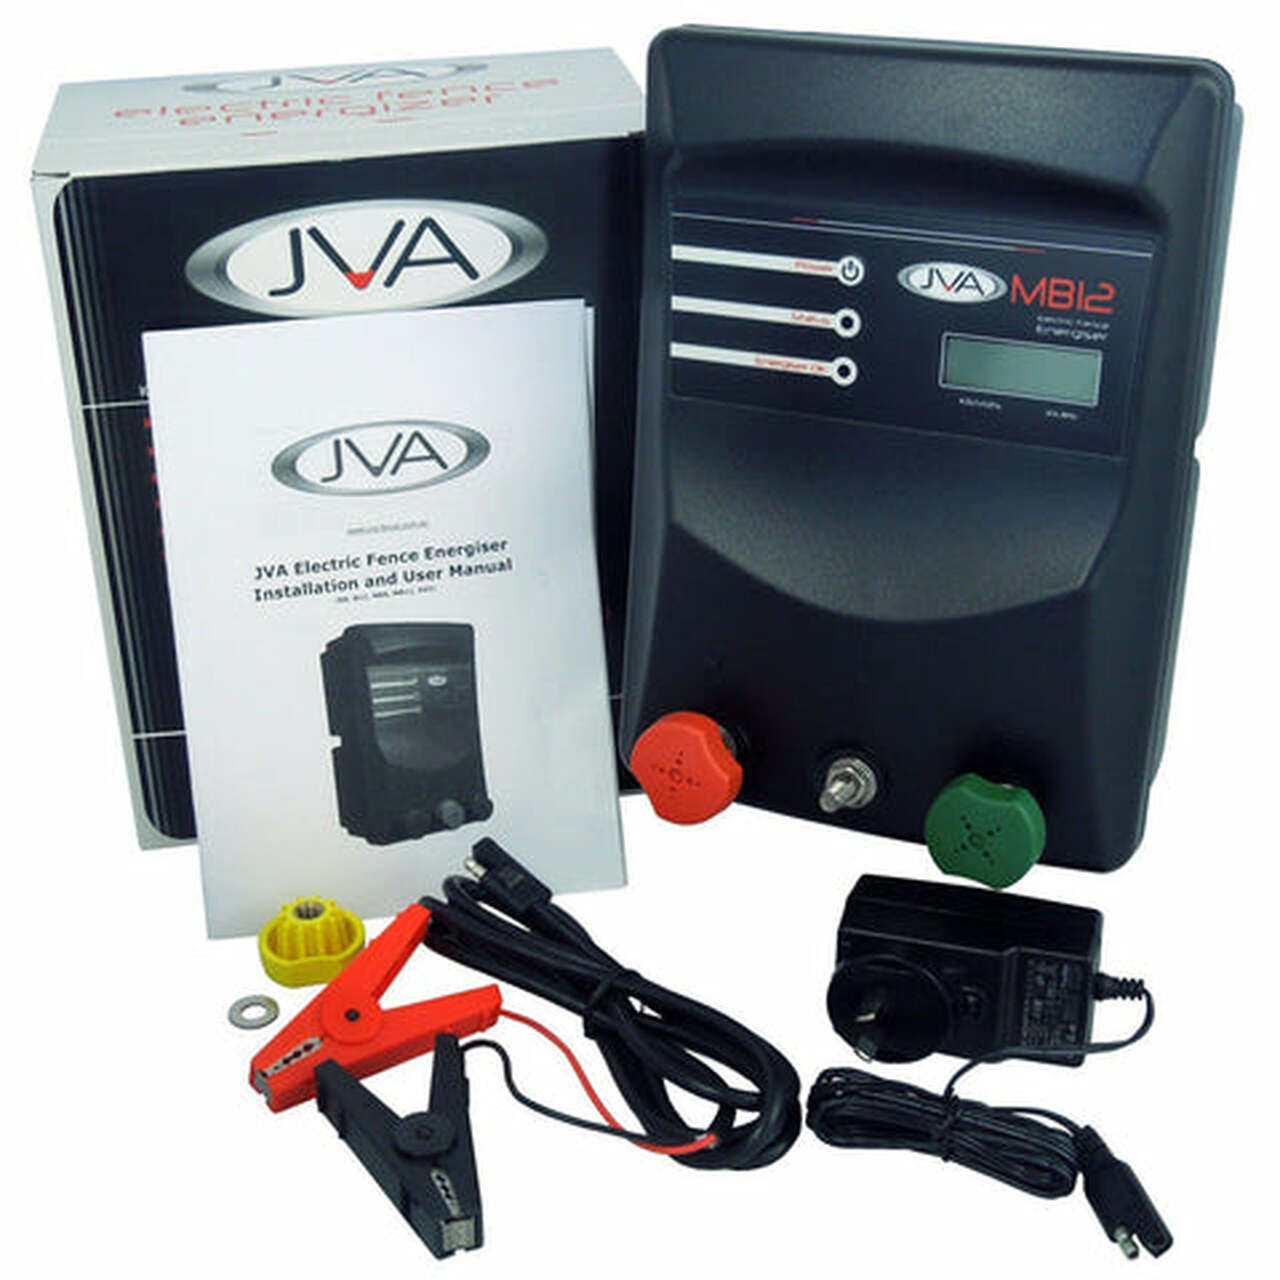 JVA MB12 IP Energiser®